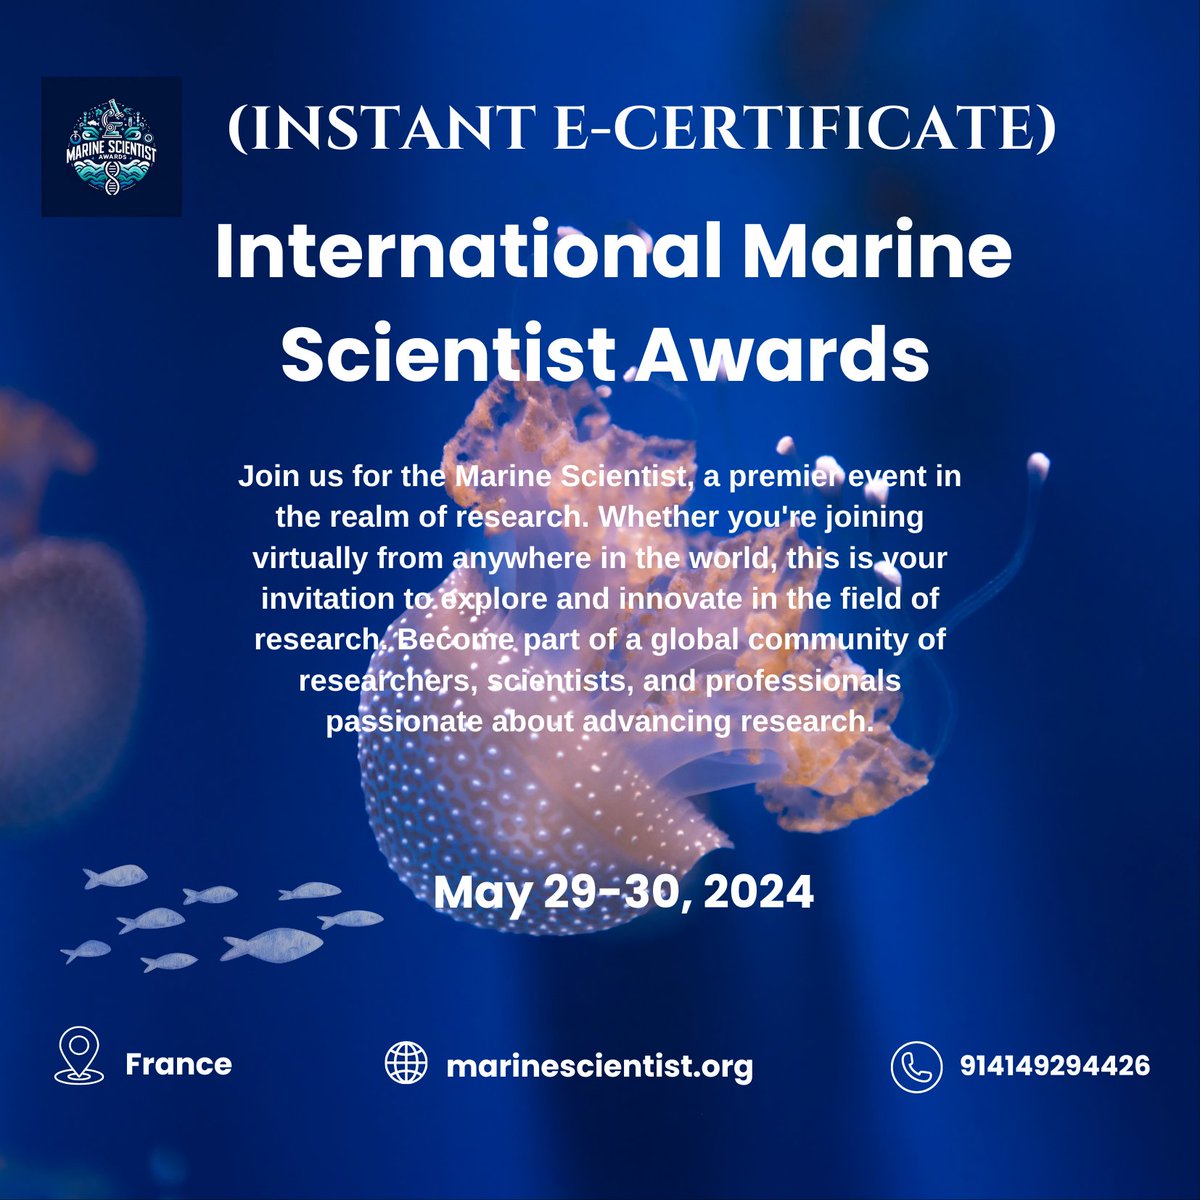 International Marine Scientist Awards
May 29-30, 2024

More information:
marinescientist.org

For Enquiry:
contact@marinescientist.org

#MarineScientist
#OceanResearch
#MarineEcology
#AquaticScience
#Oceanography
#MarineBiology
#MarineConservation
#MarineExploration